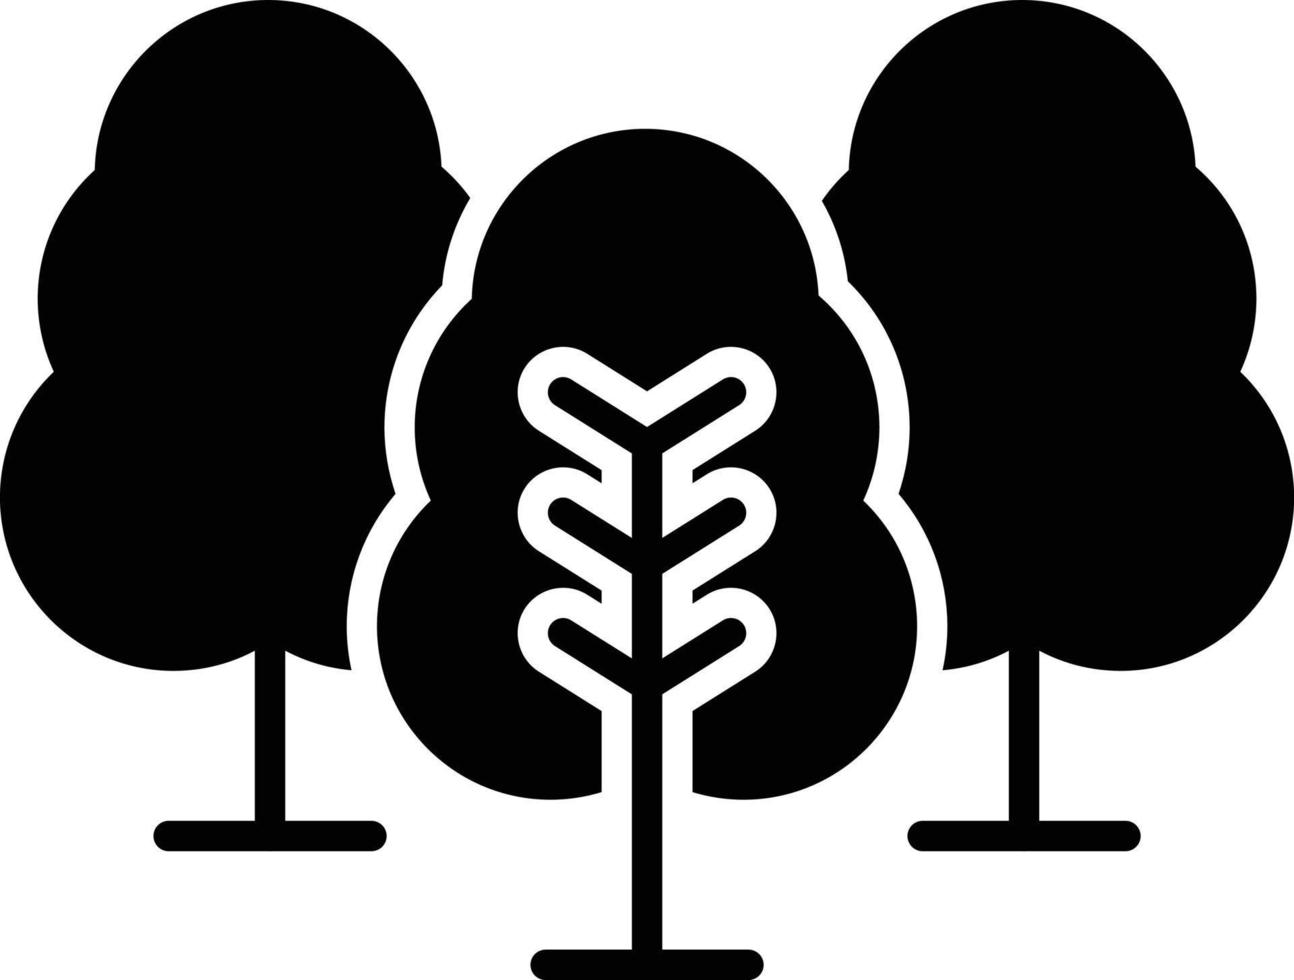 Bäume Glyphe Symbol vektor